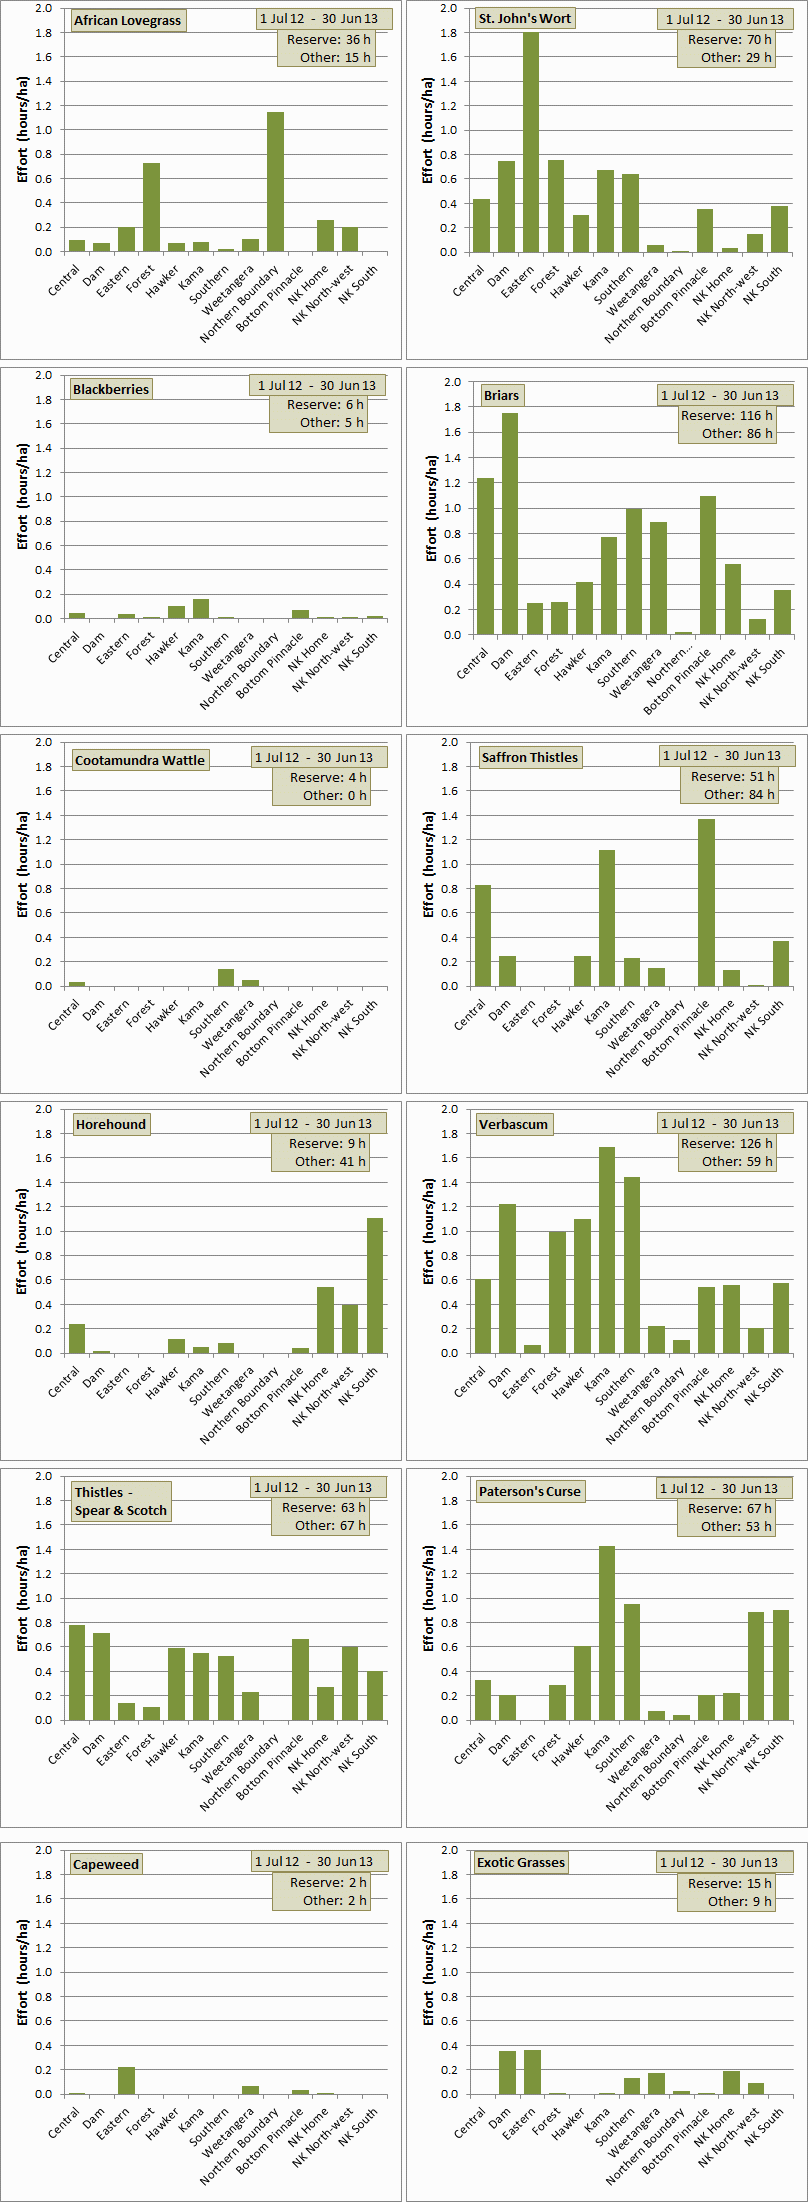 species distribution across paddocks